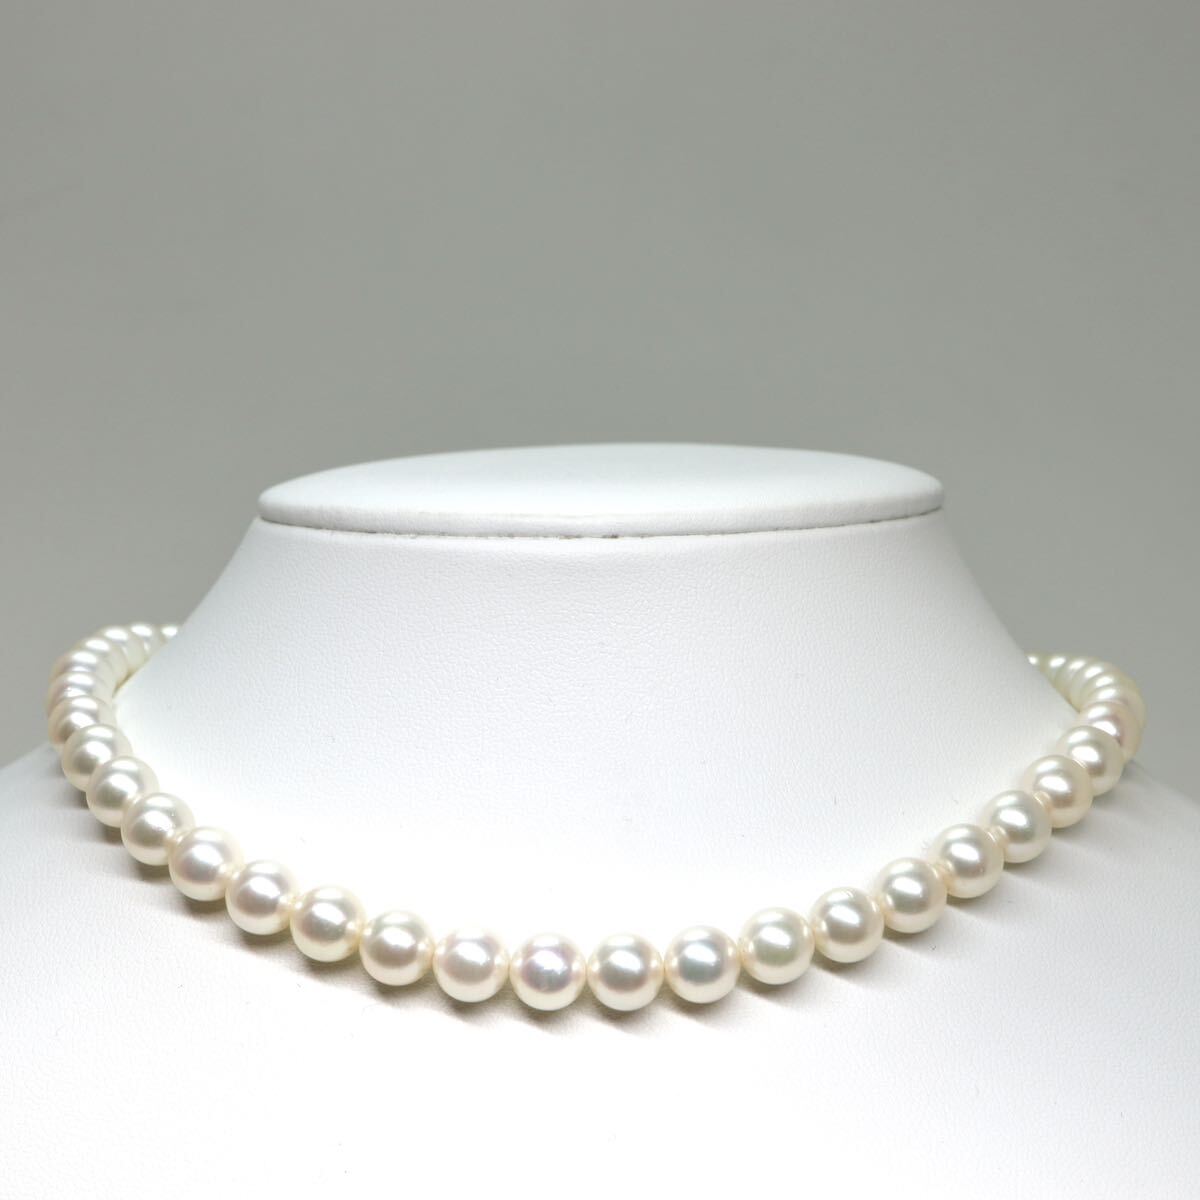 《K14 アコヤ本真珠ネックレス》A 約7.5-8.0mm珠 32.4g 約37.5cm pearl necklace ジュエリー jewelry DE0/DE0の画像2